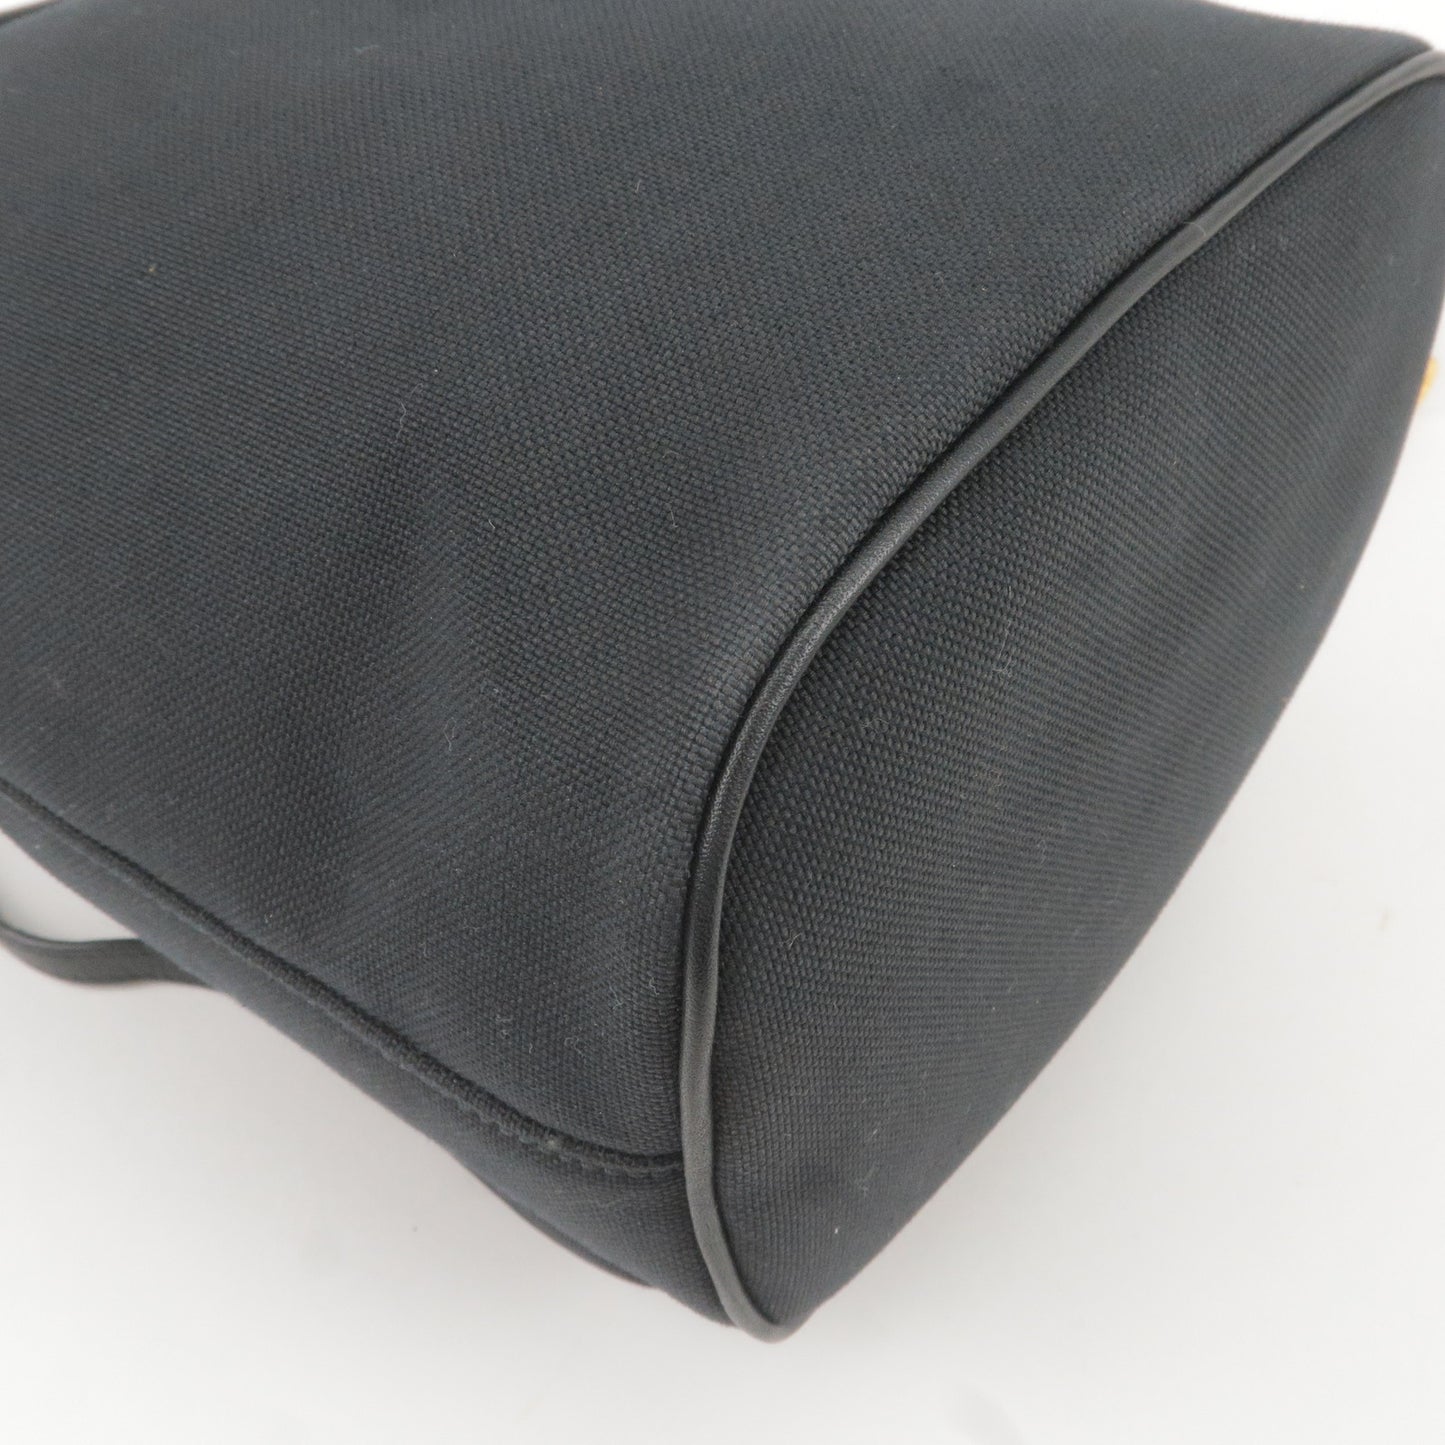 PRADA Logo Jacquard Leather 2Way Bag Hand Bag Black 1BH038